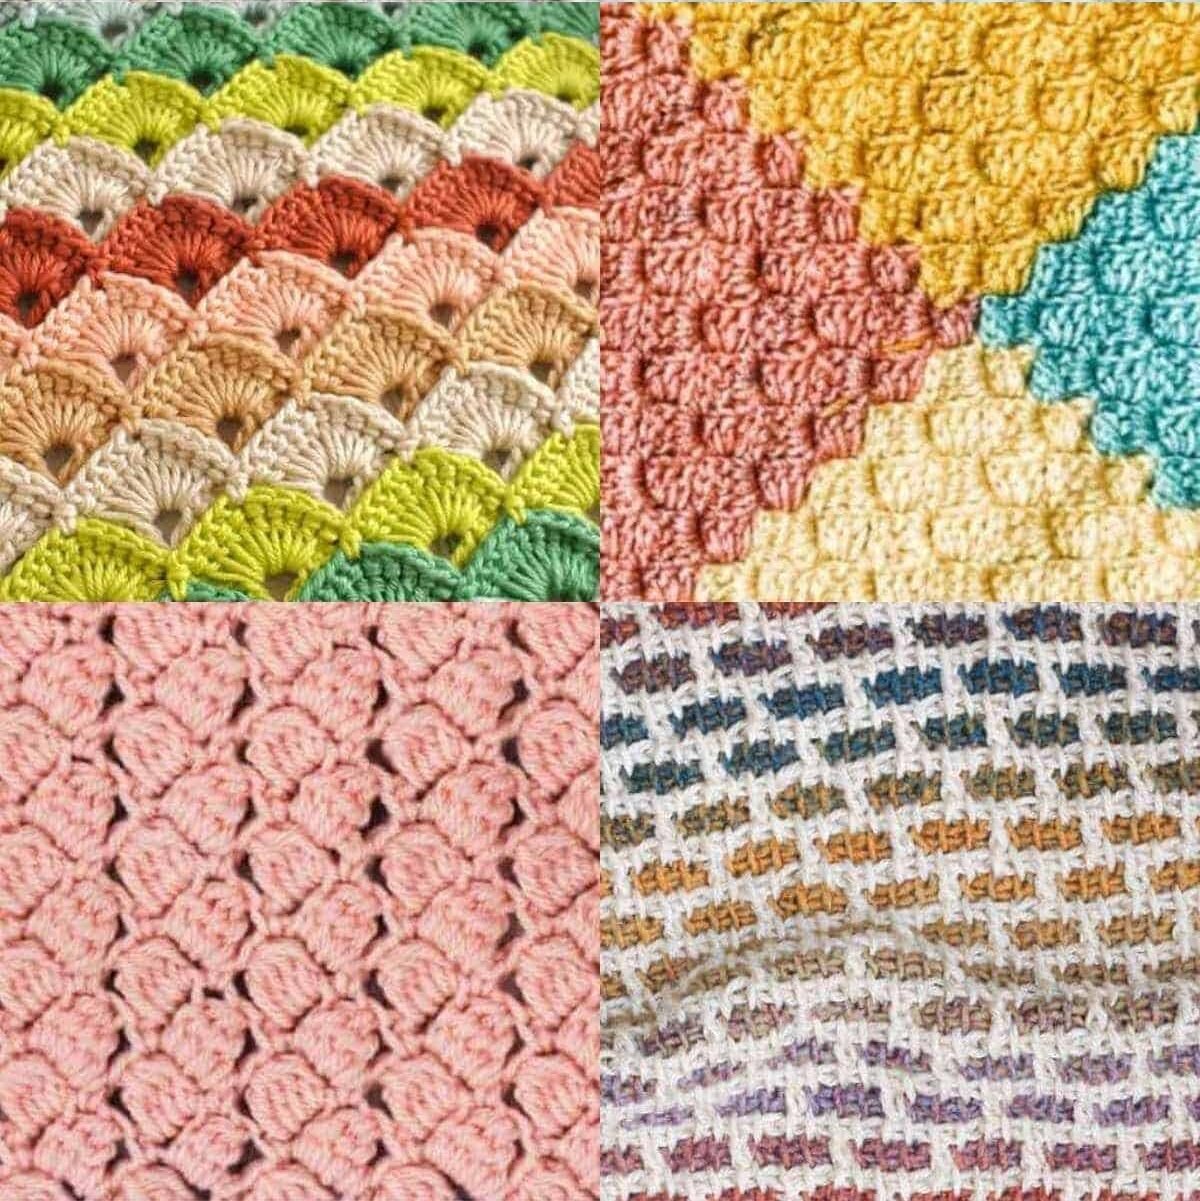 Beautifully Textured Crochet Stitches (Patterns & Tutorials)